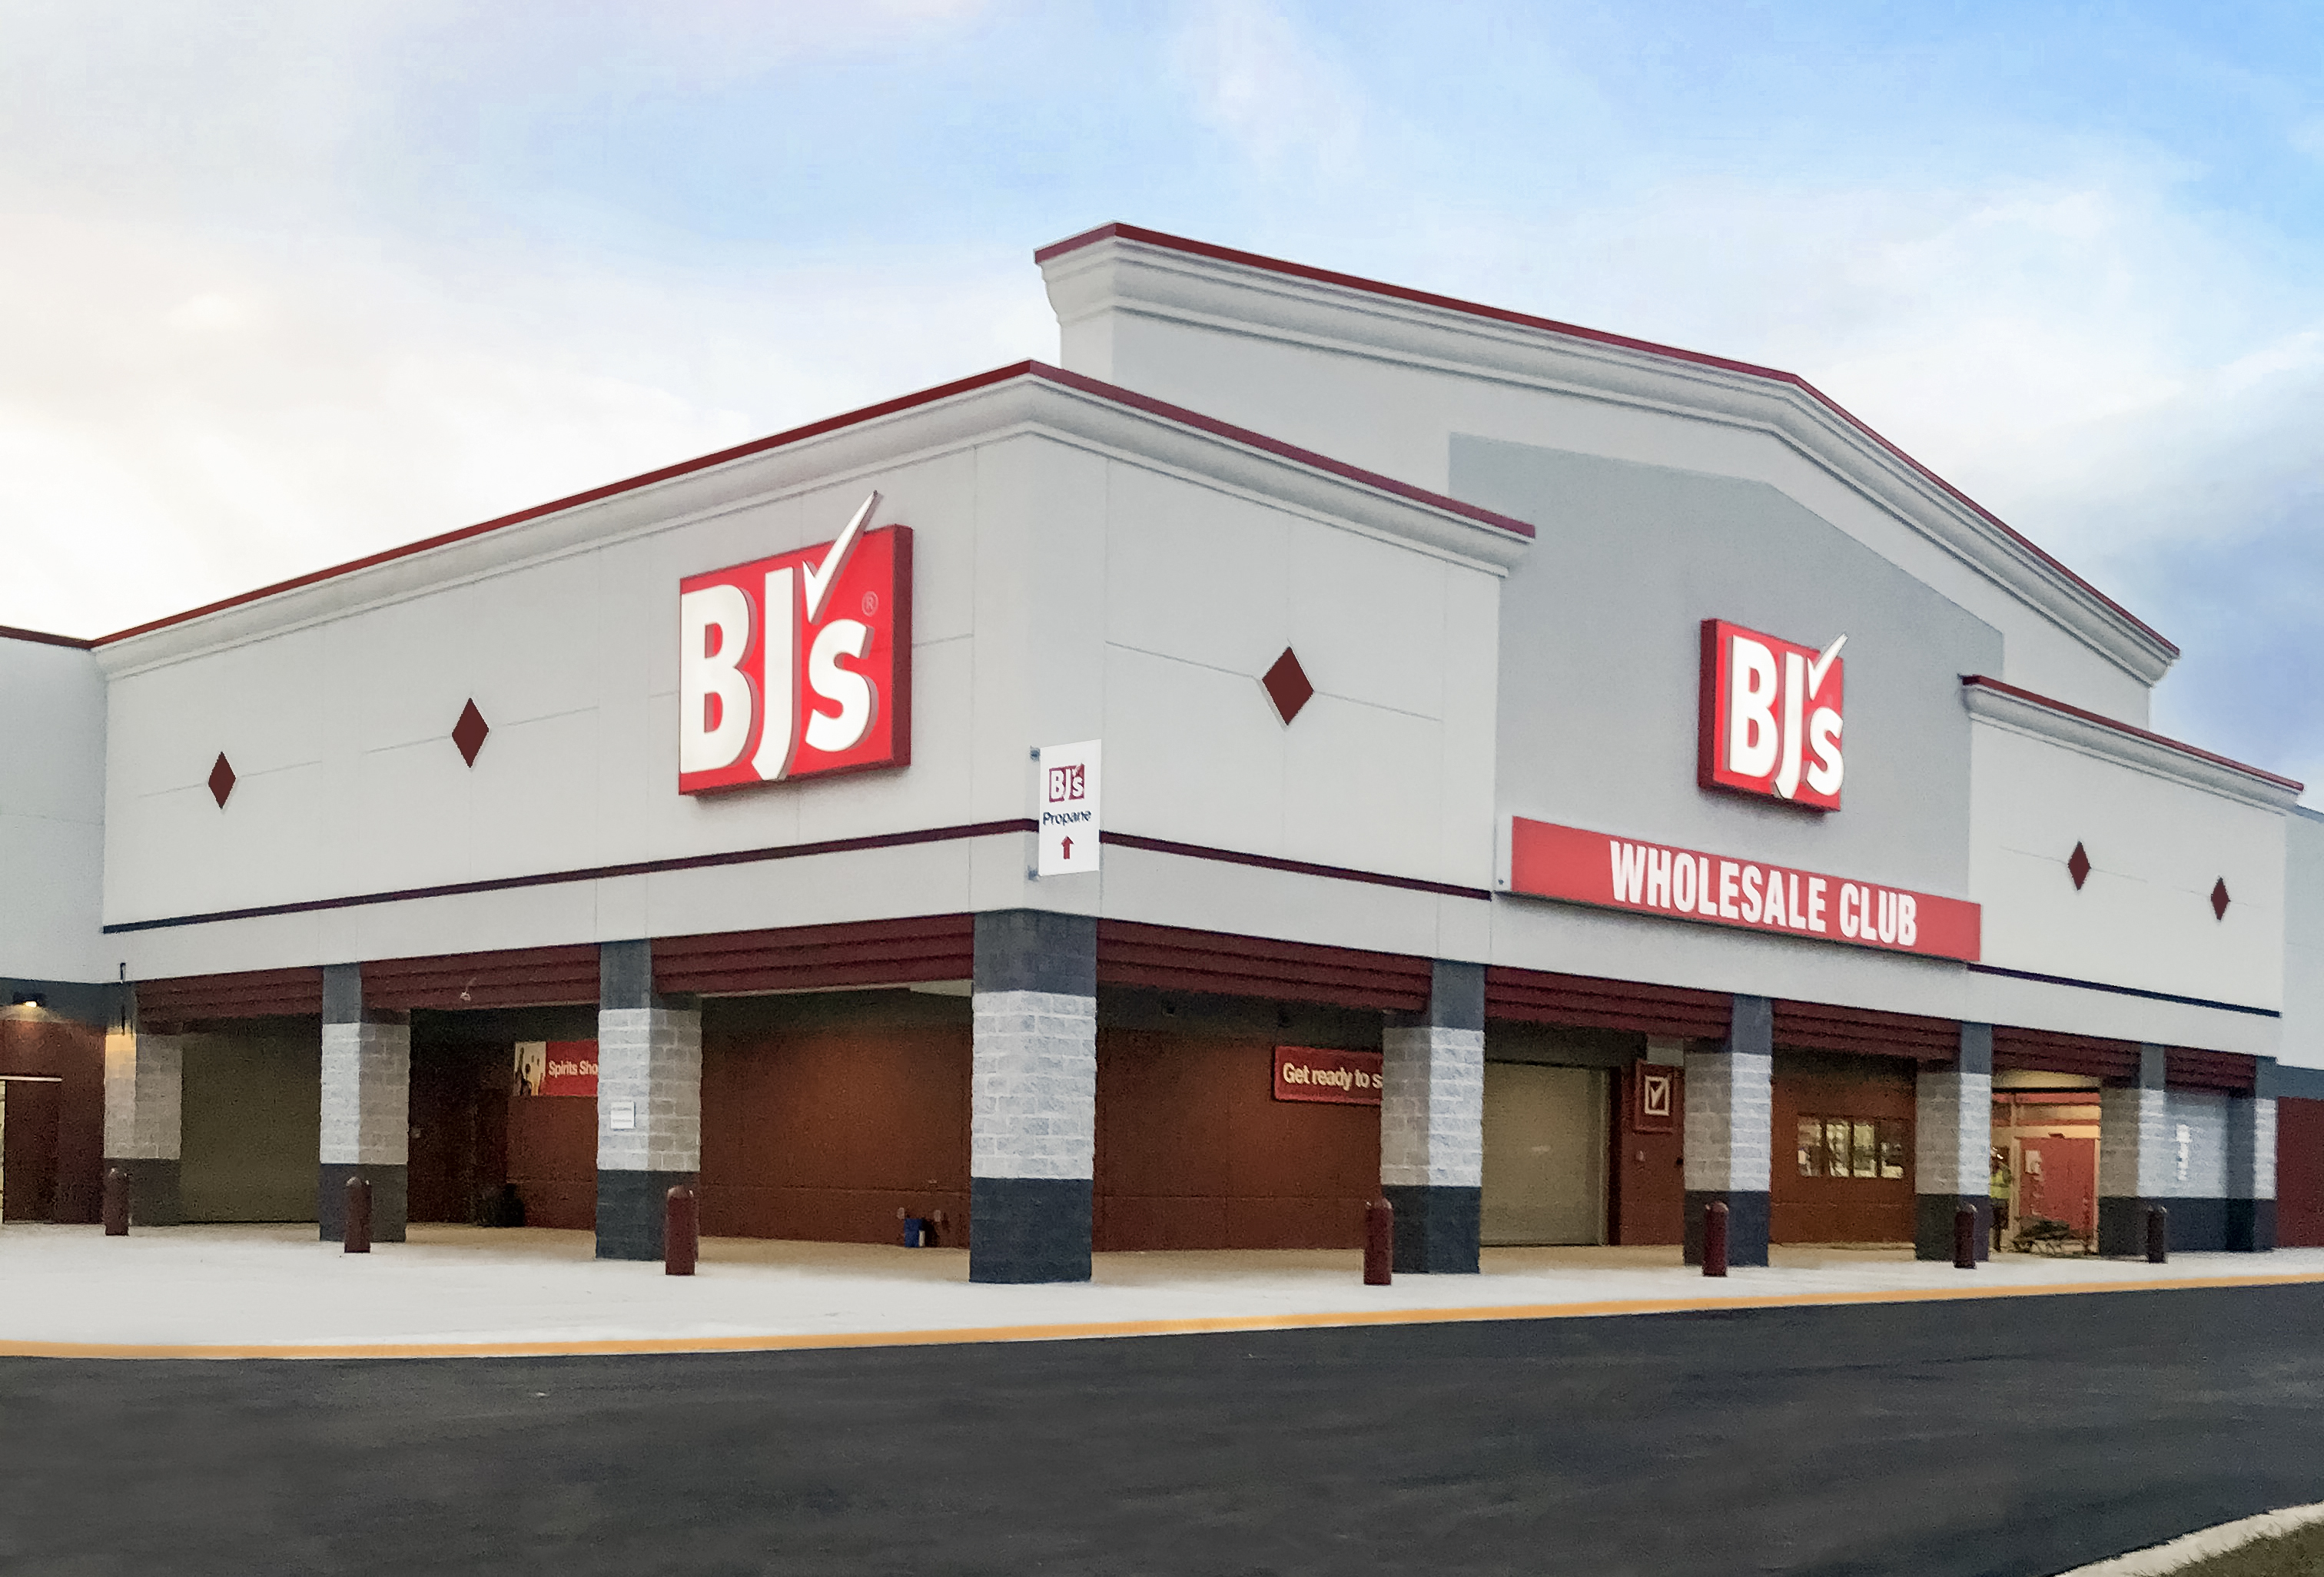 BJ's Wholesale Club Seabrook, NH wholesale option, MA border